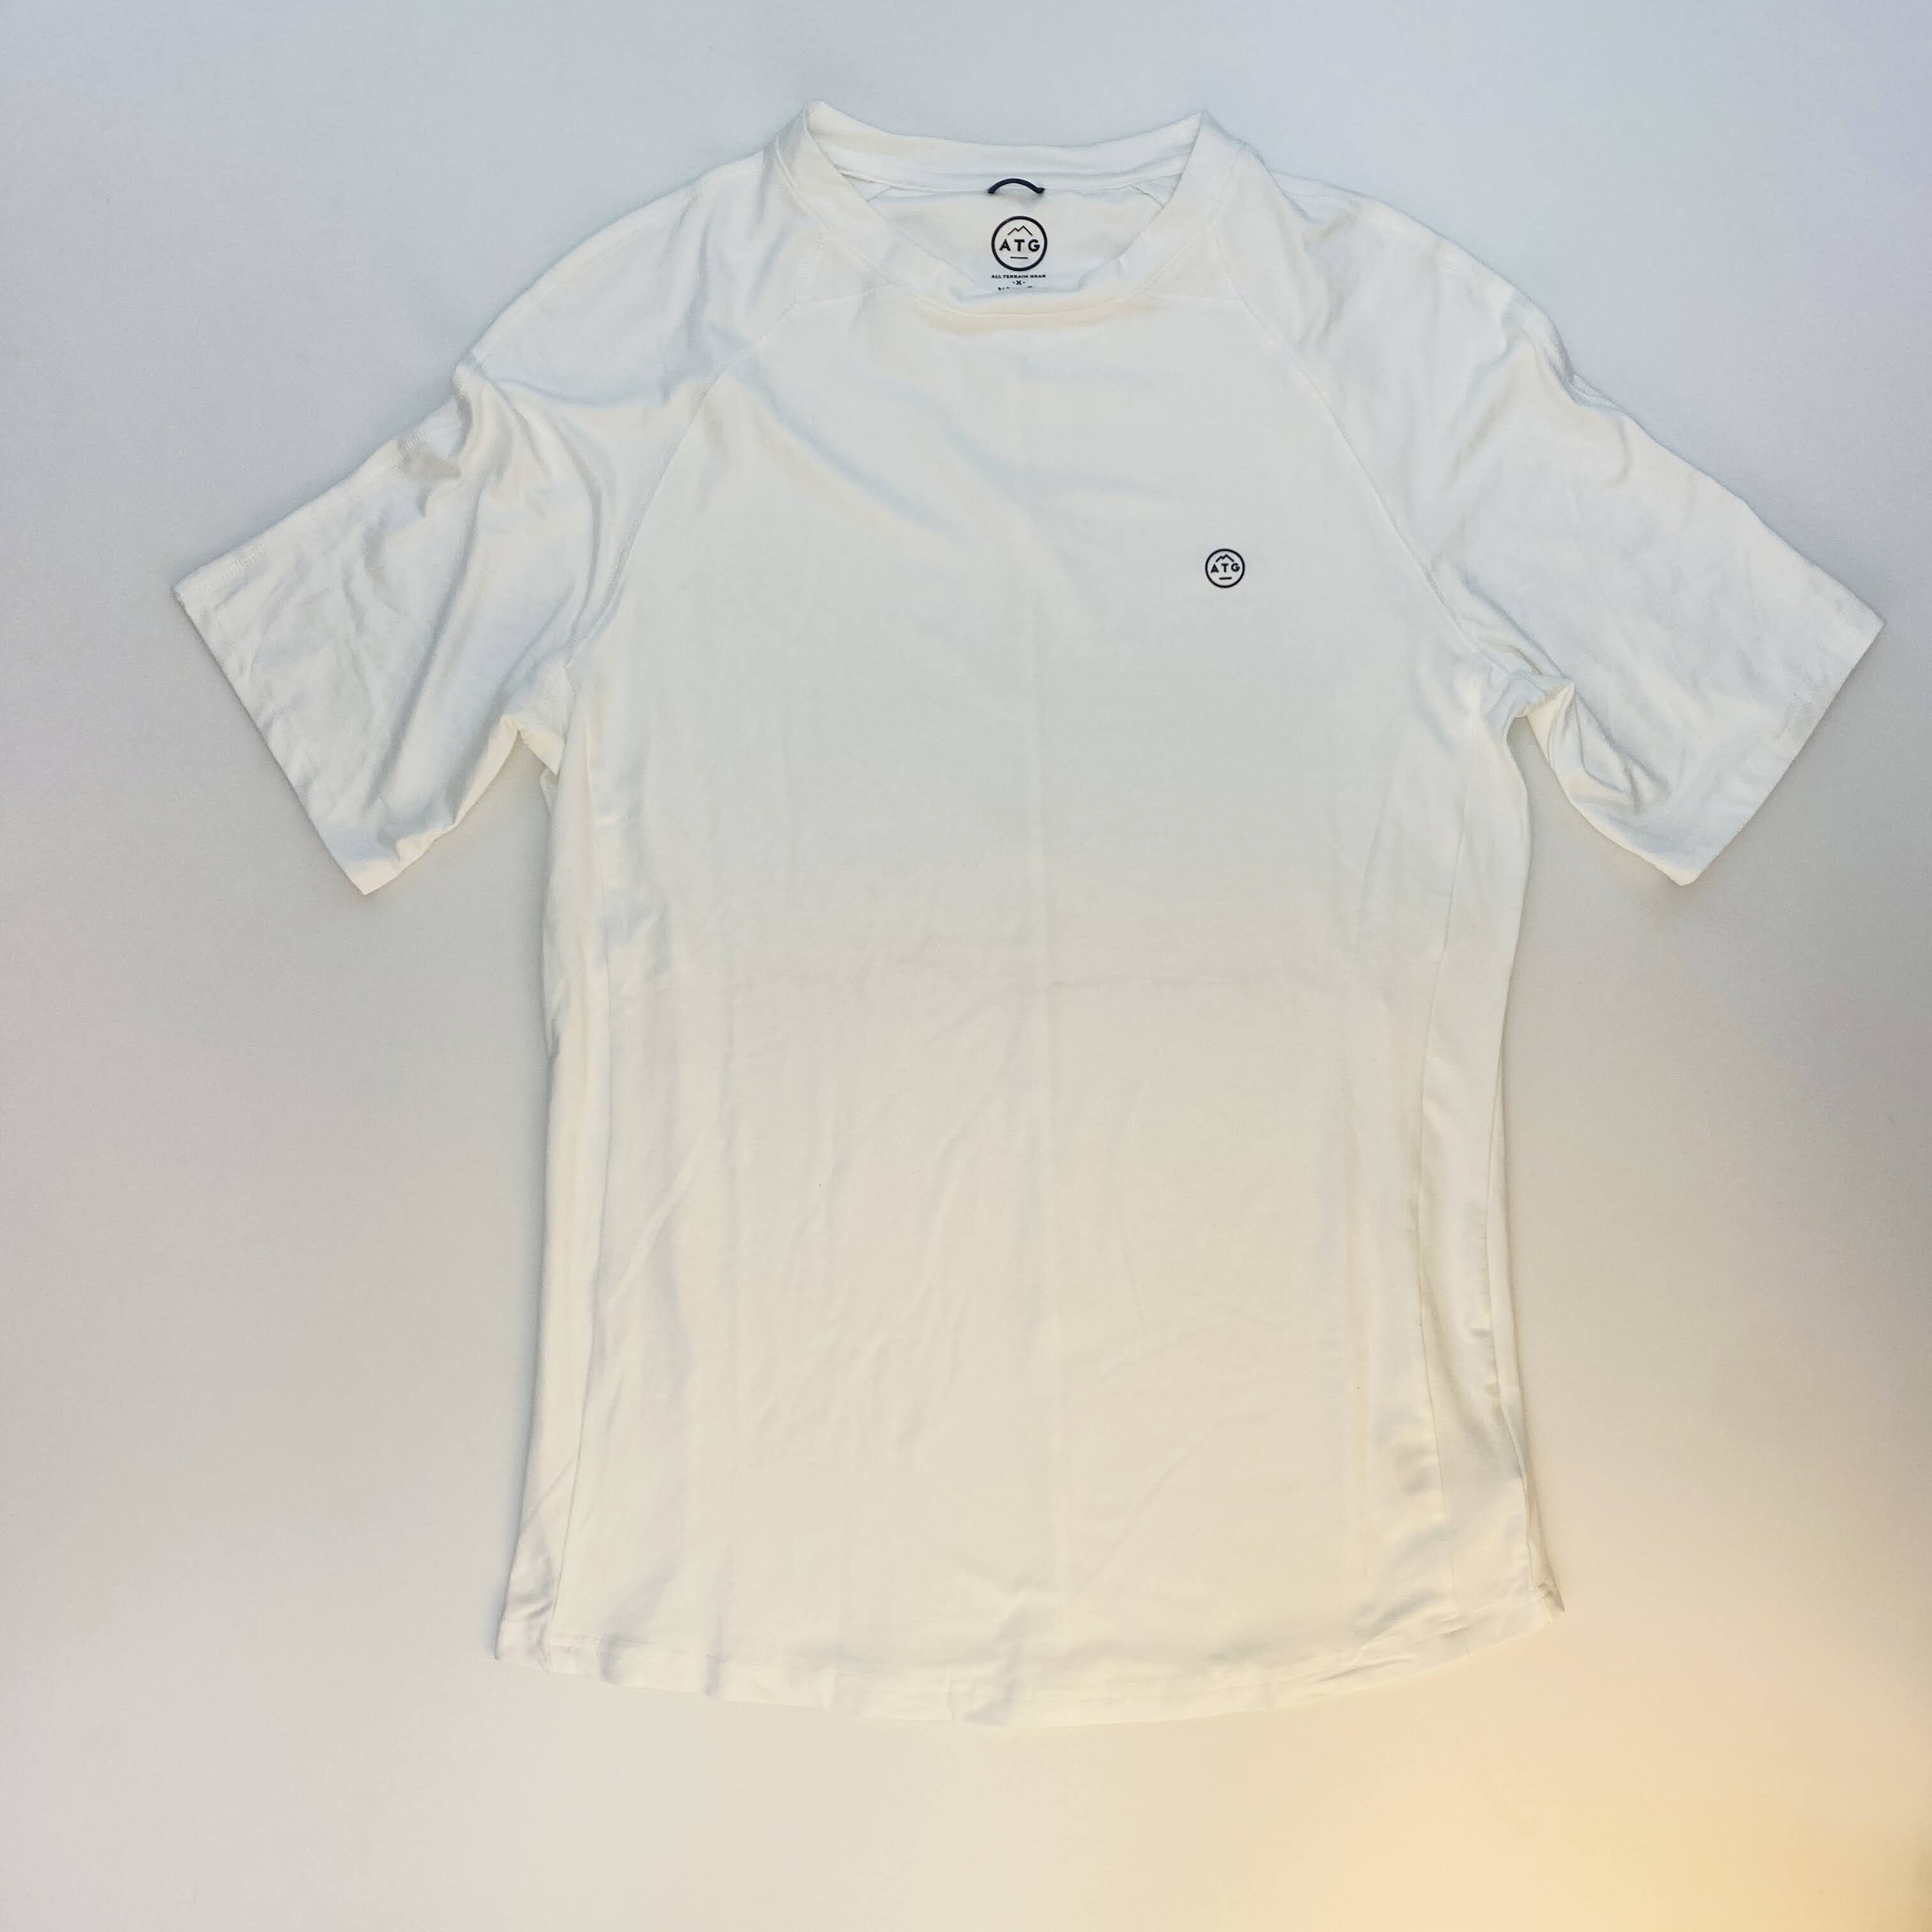 Wrangler Ss Performance T Shirt - Seconde main T-shirt homme - Blanc - XXL | Hardloop